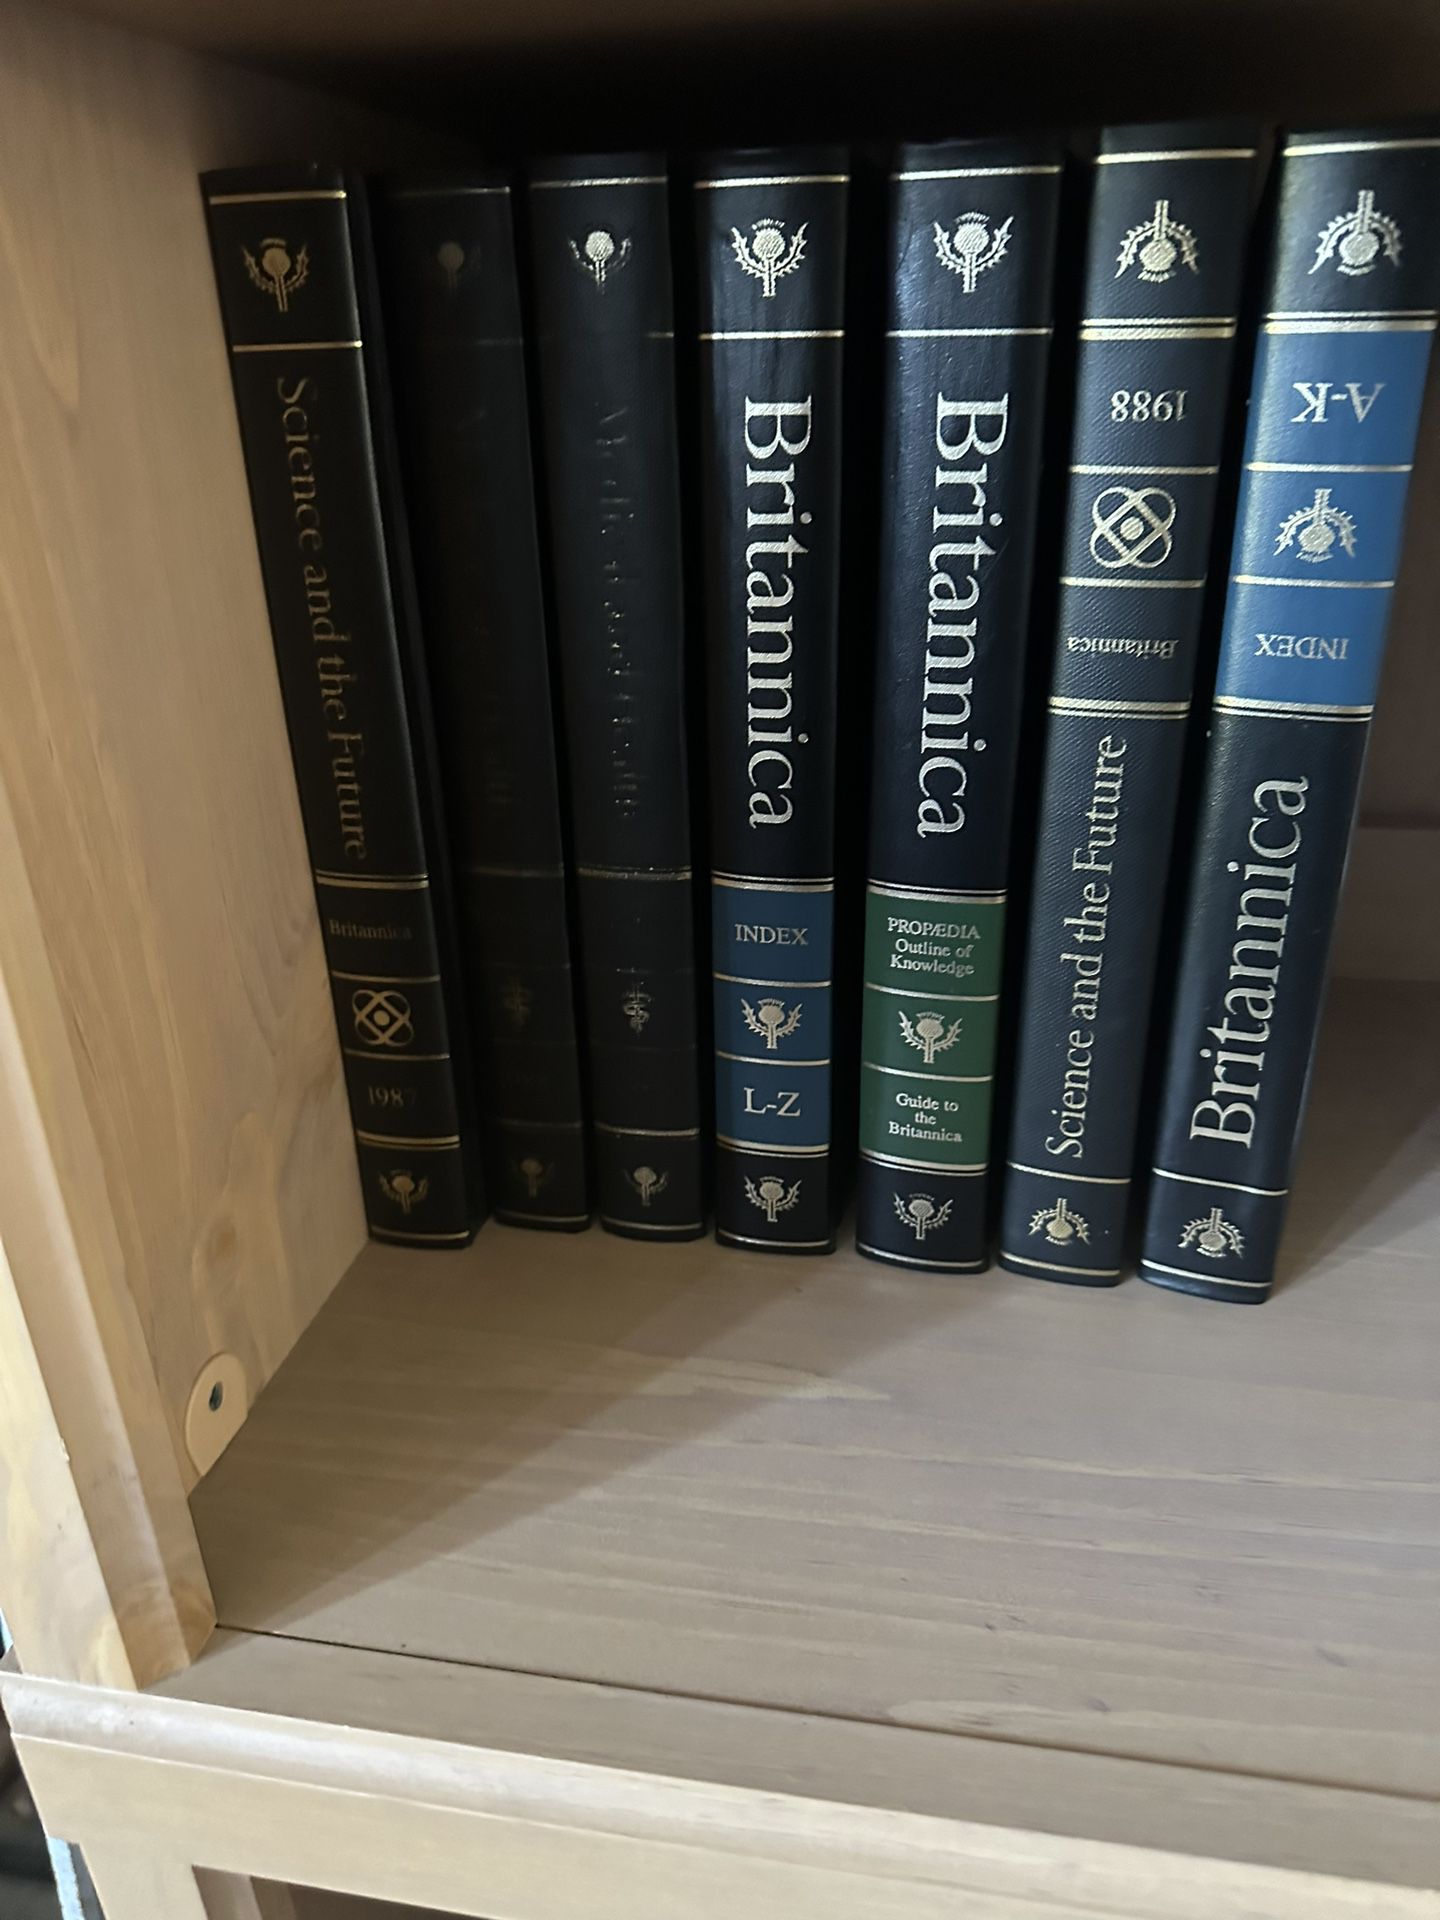 set of encyclopedia Britannica 1988